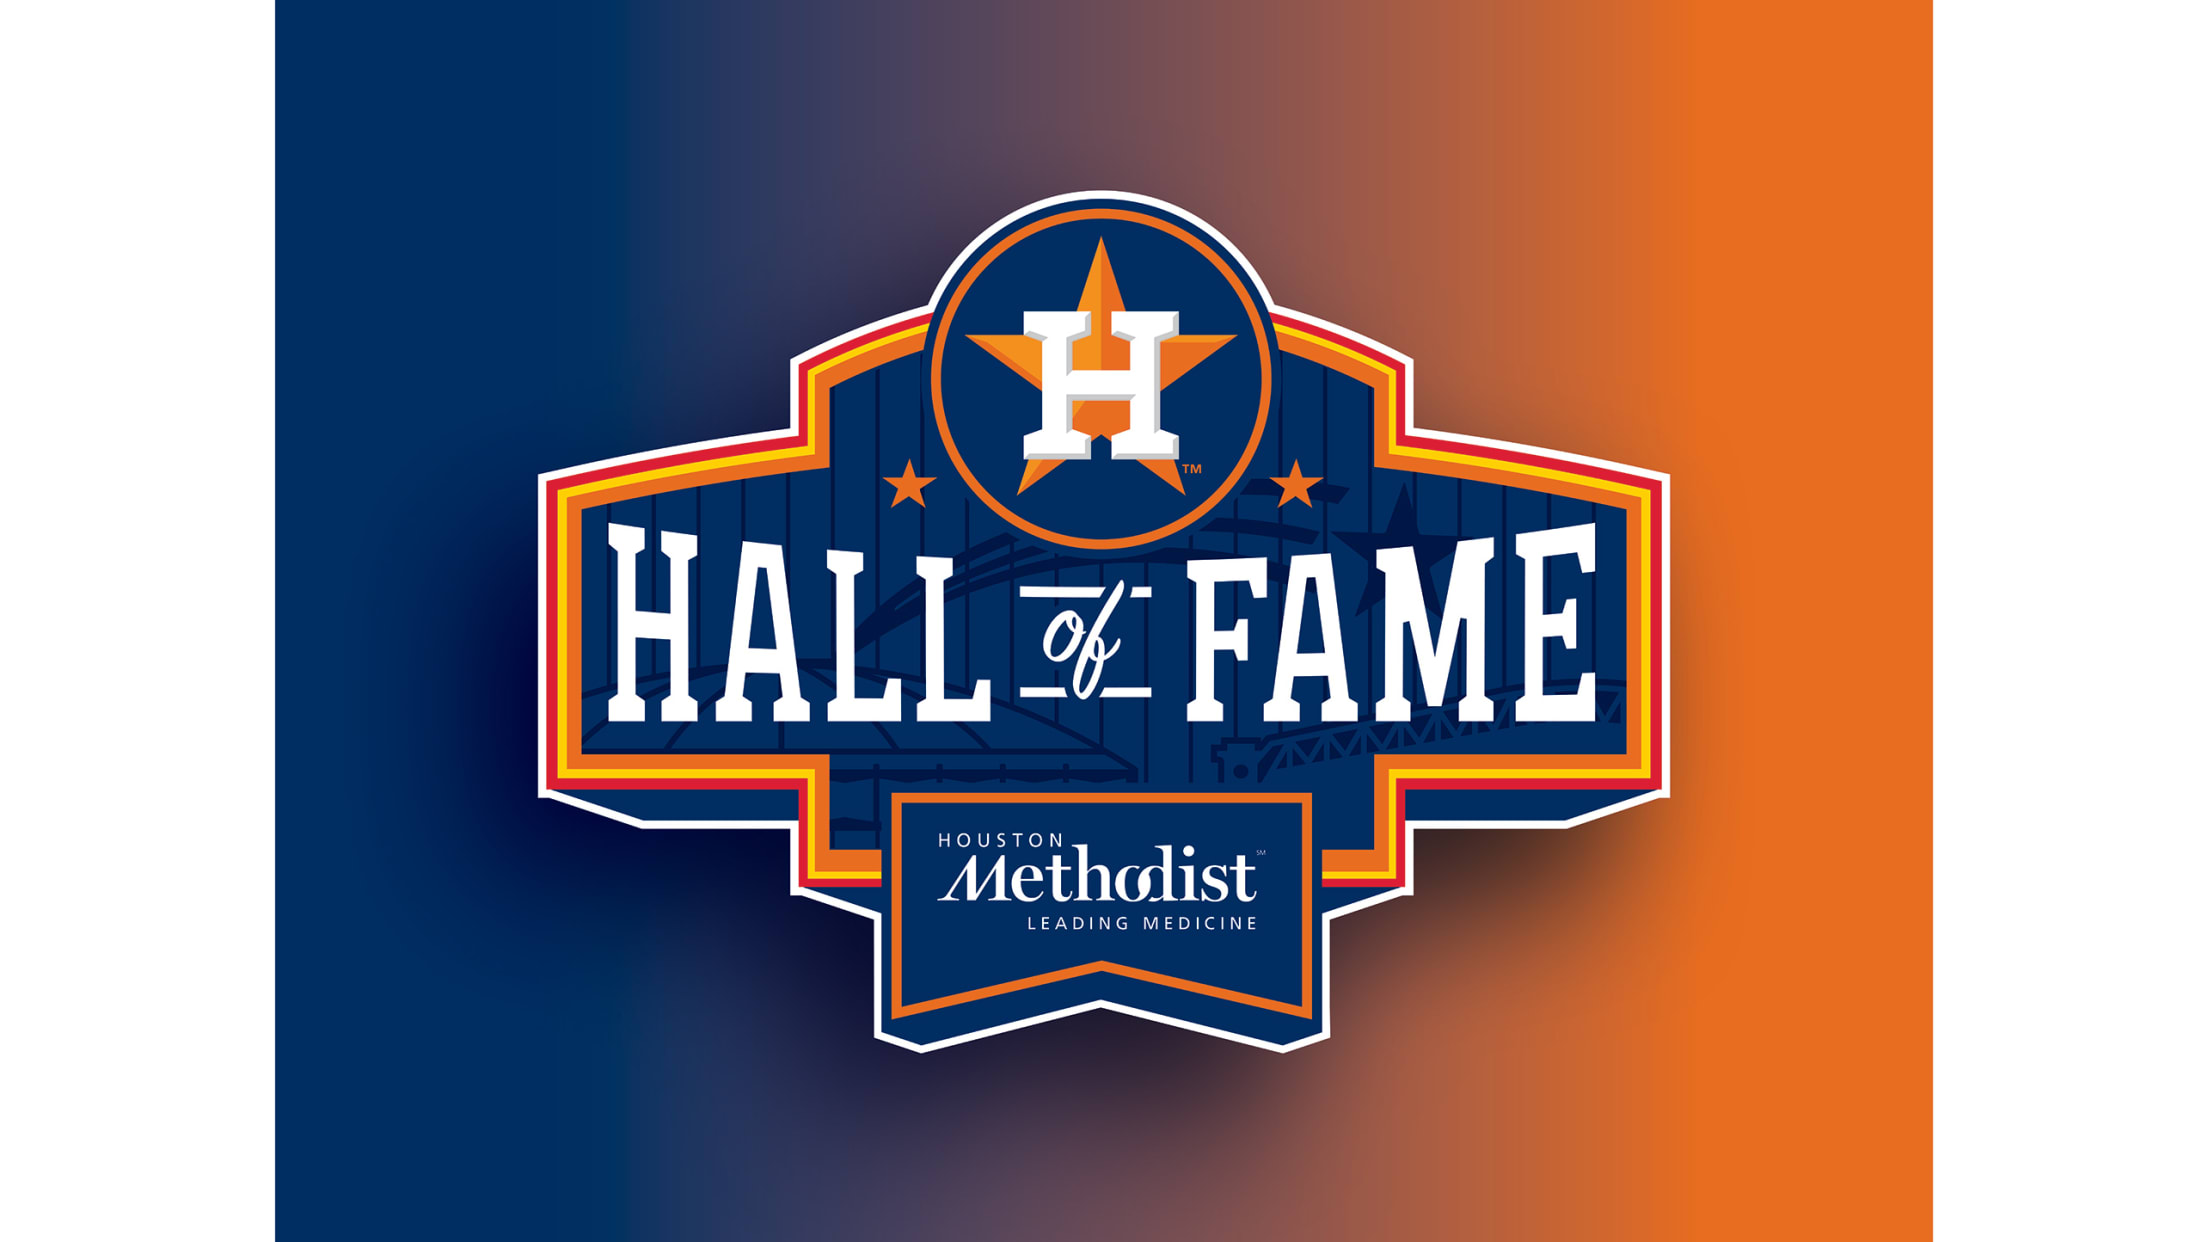 Houston Astros - Logo History 